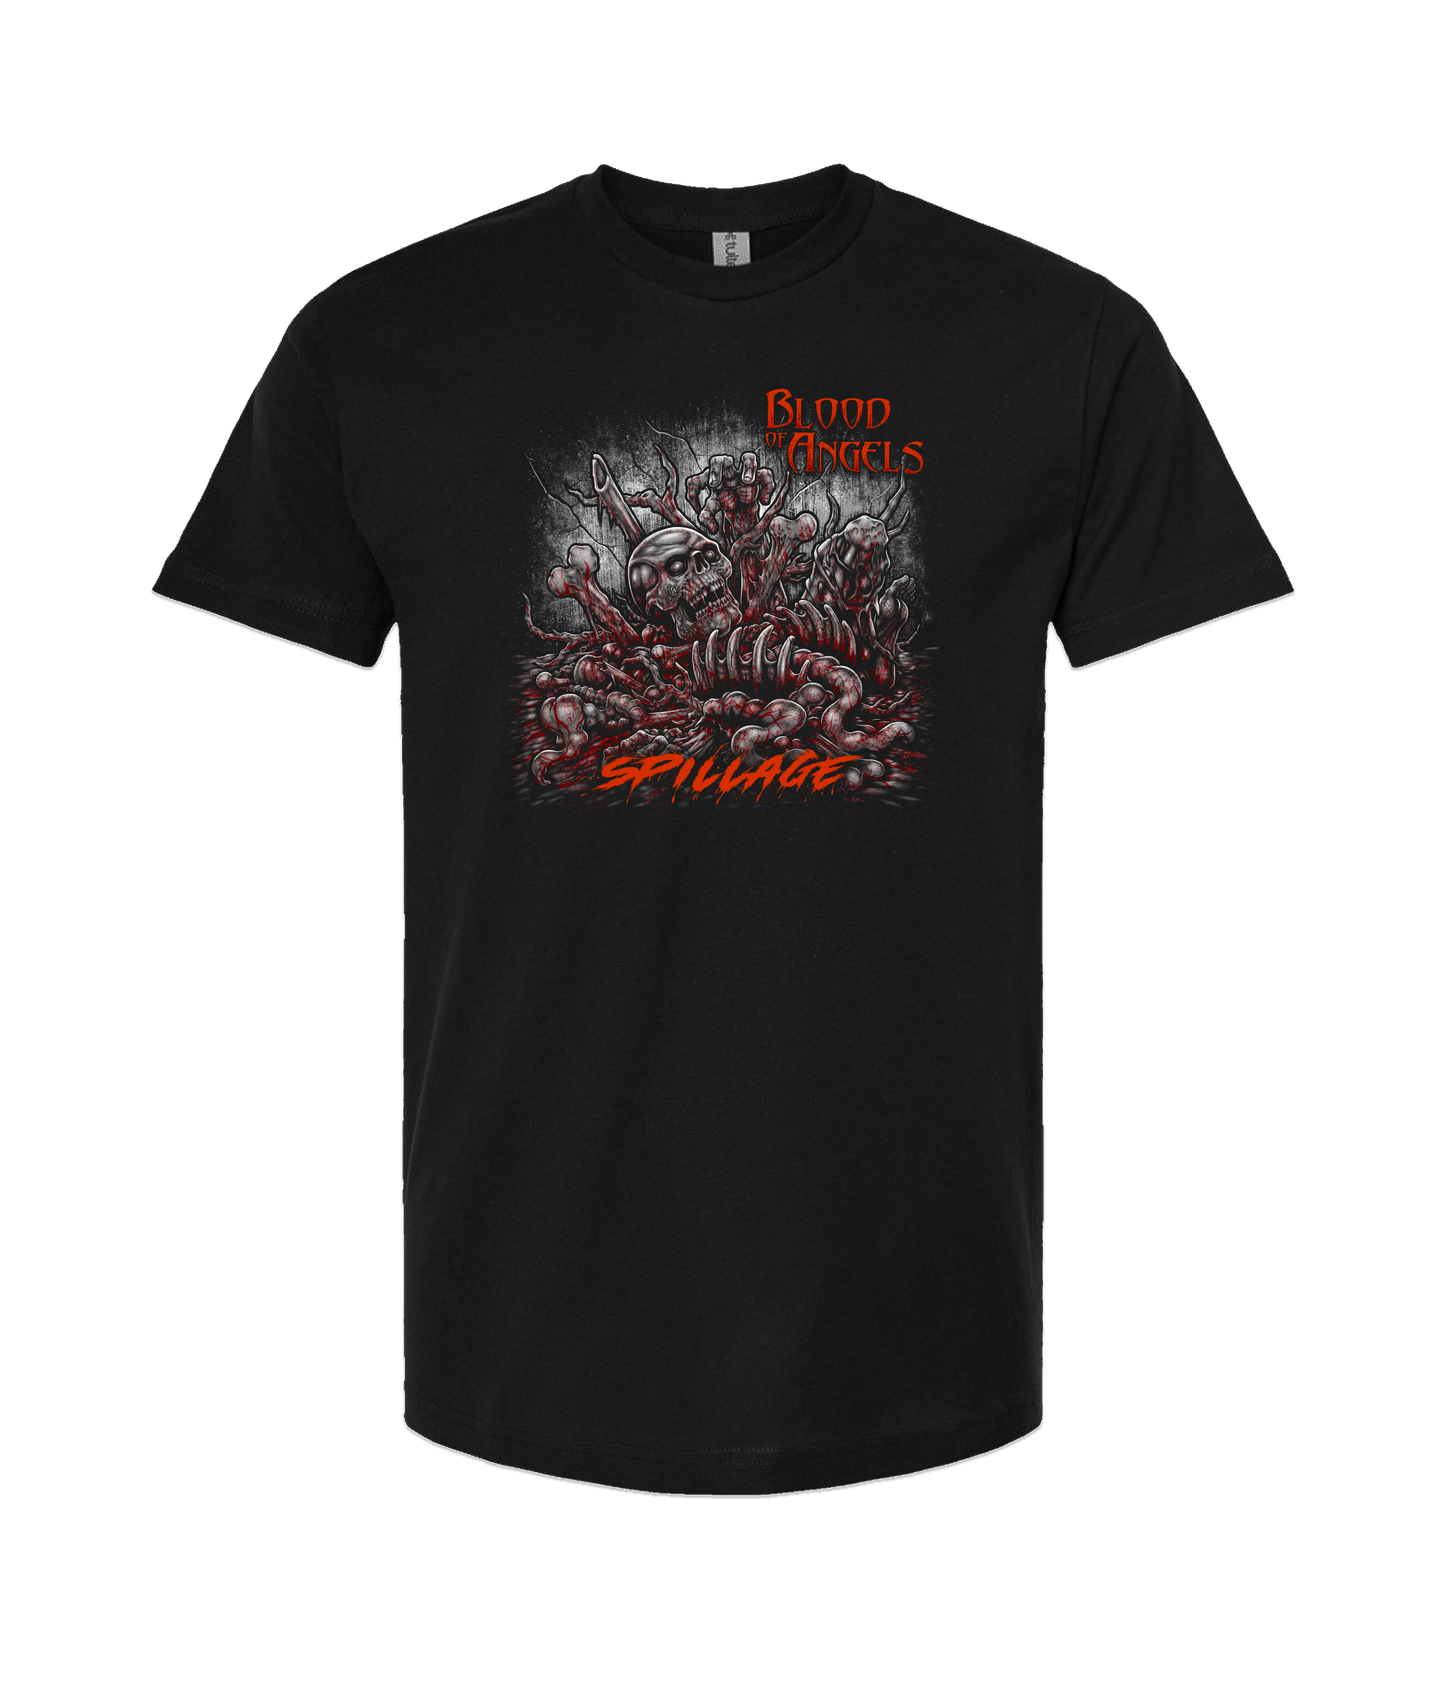 Blood of Angels Battle Gear - Spillage - Black T Shirt